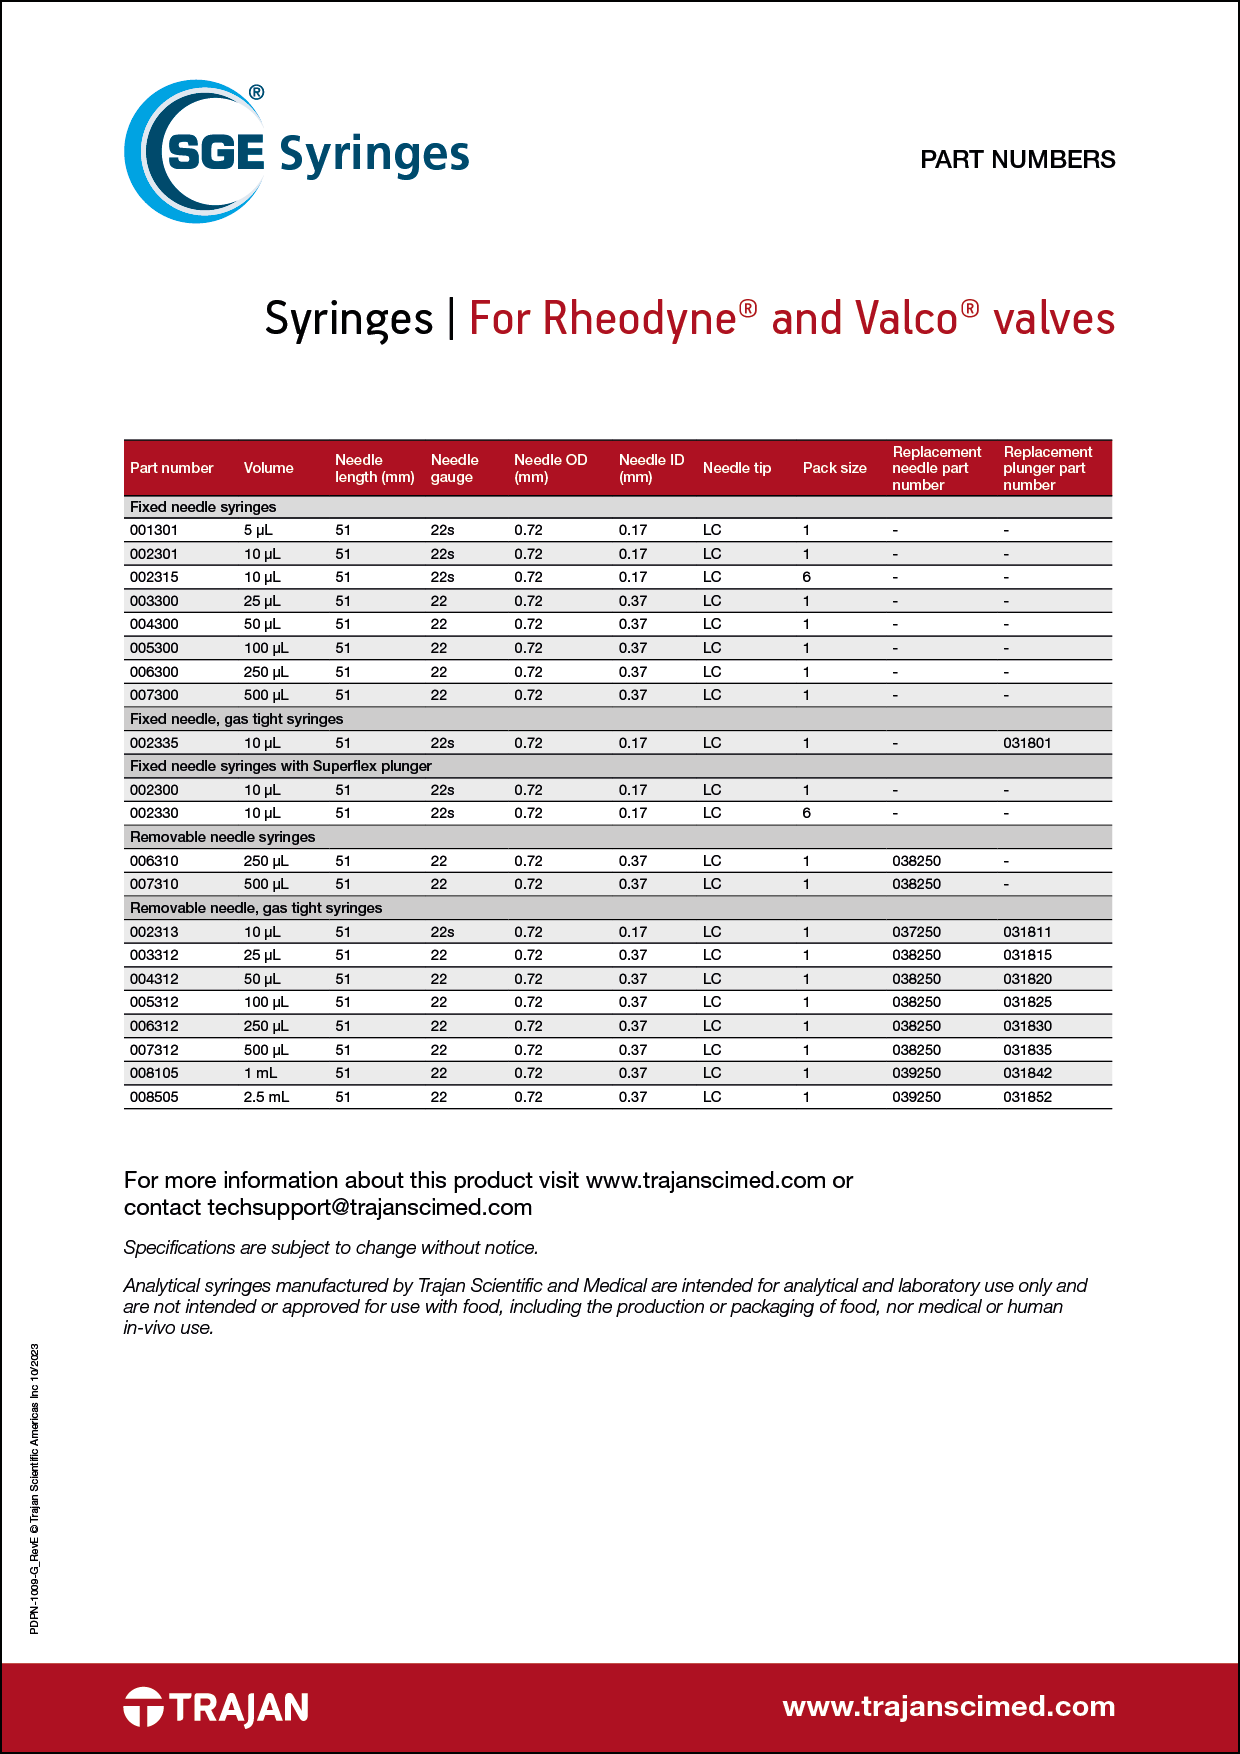 Part Number List - SGE syringes for Rheodyne and Valco valves